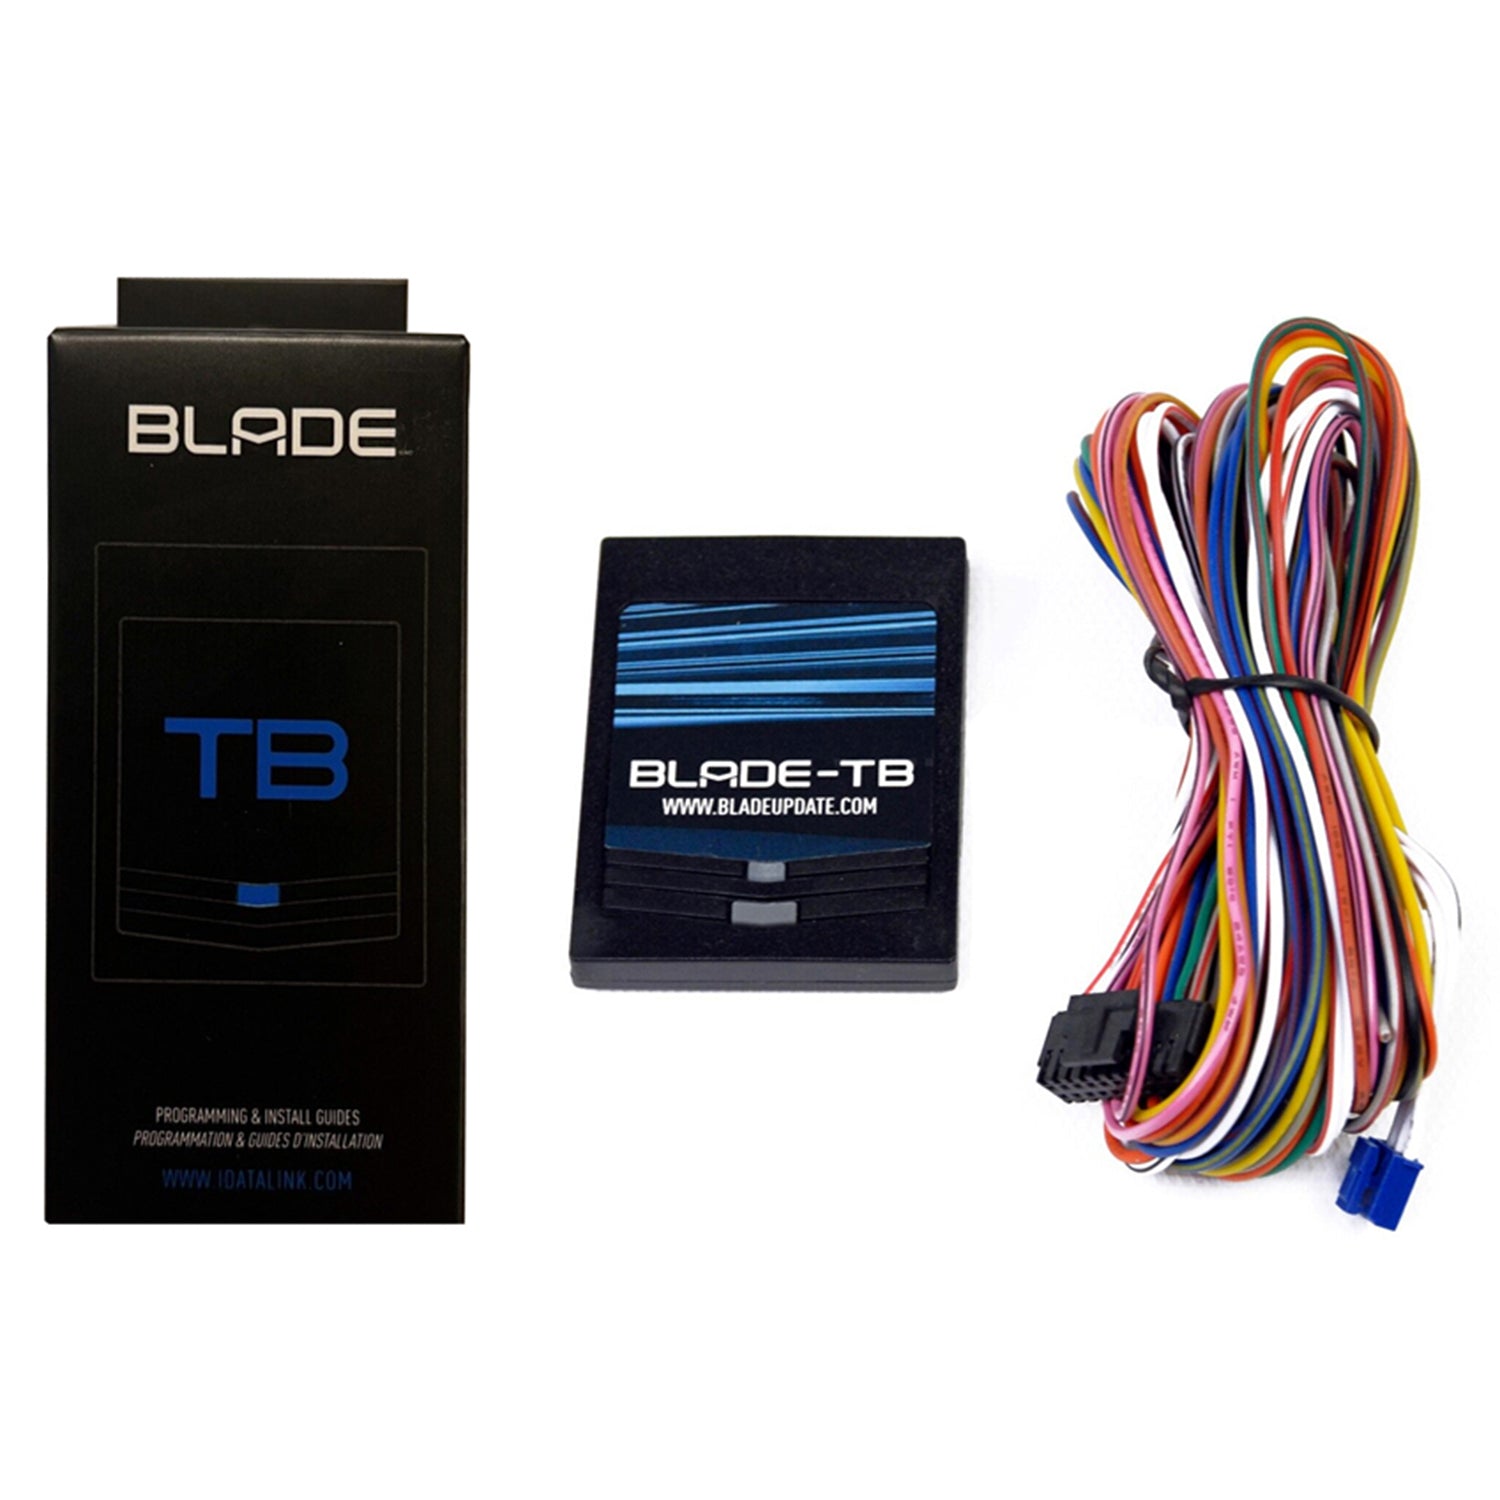 Idatalink BladeTB Web Programmable Data Immobilizer Bypass Integration Cartridge